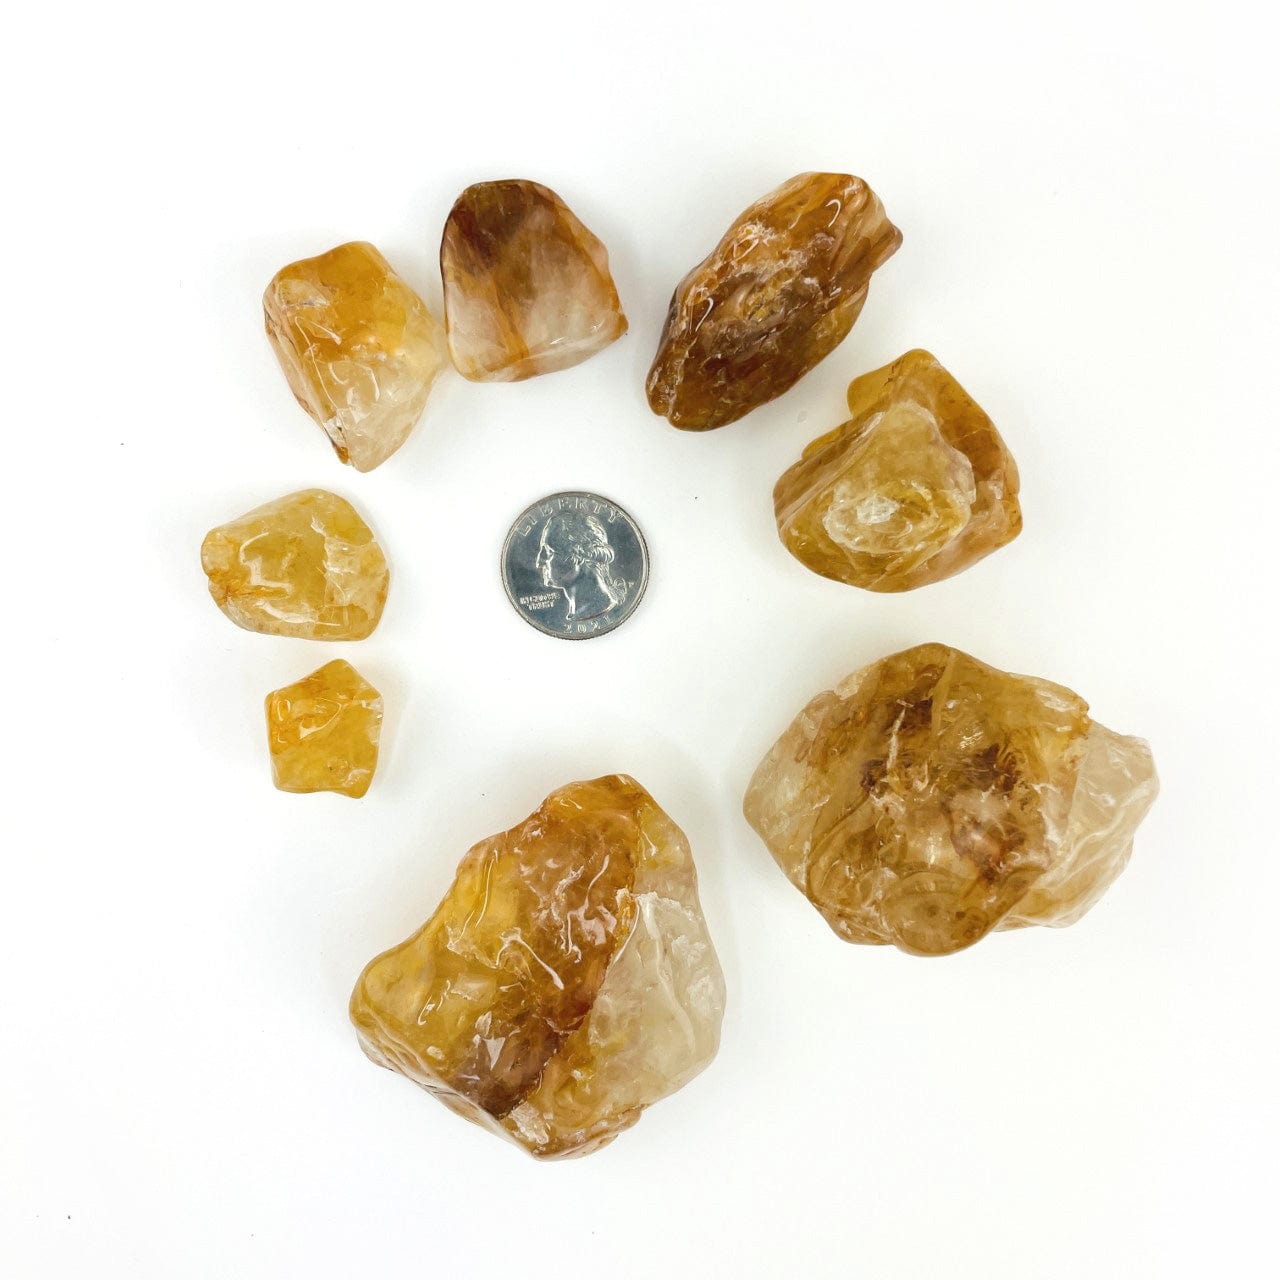 Golden Healer Quartz Polished Tumbled Stones around a quarter for size reference